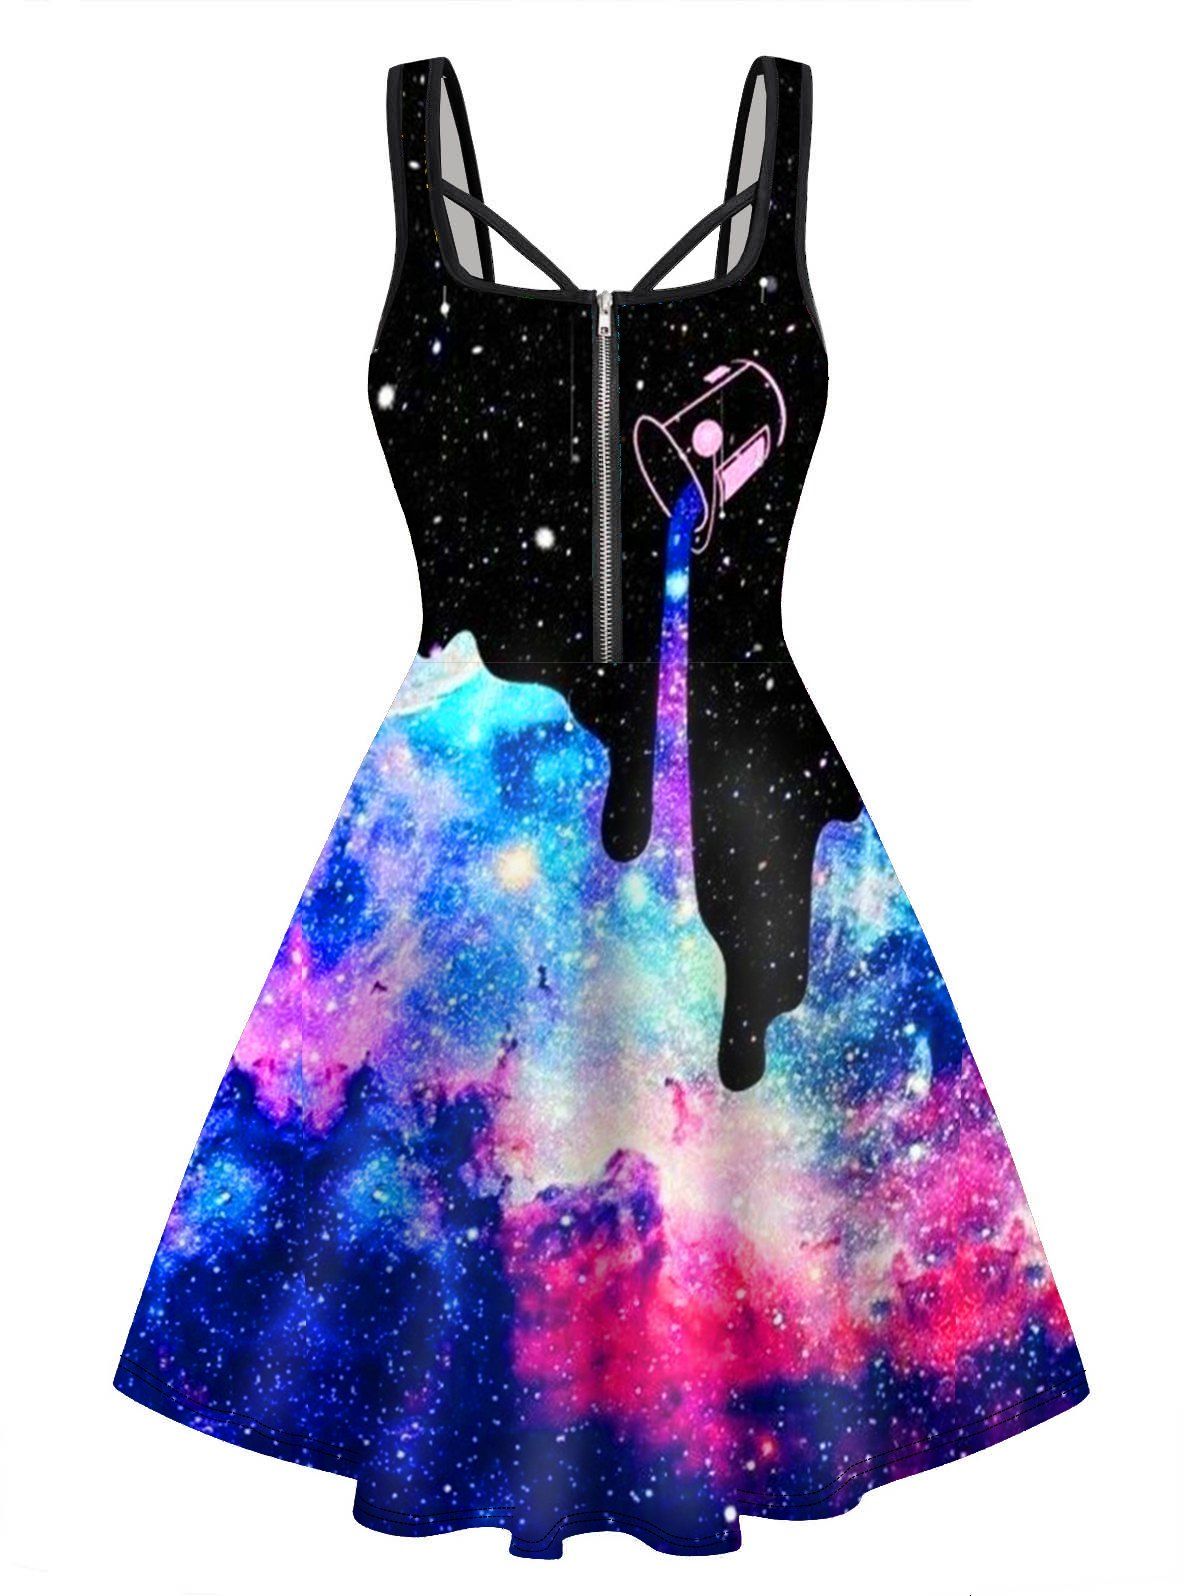 Colorful Galaxy Print Mini Dress Half Zipper Sleeveless A Line Cami Dress - BLACK S